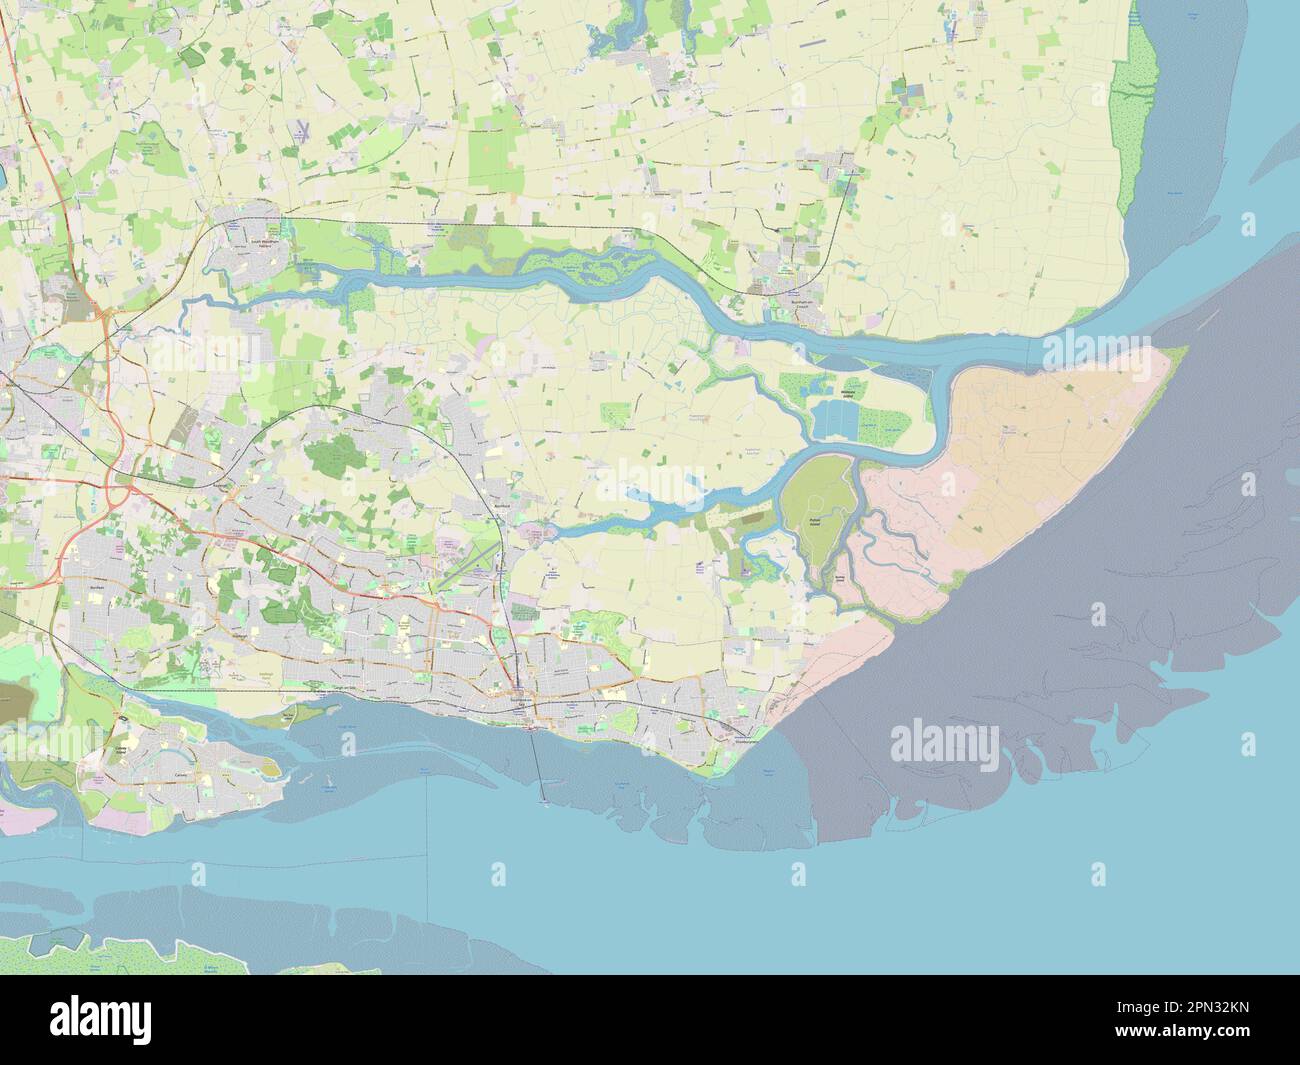 Rochford, non metropolitan district of England - Great Britain. Open Street Map Stock Photo